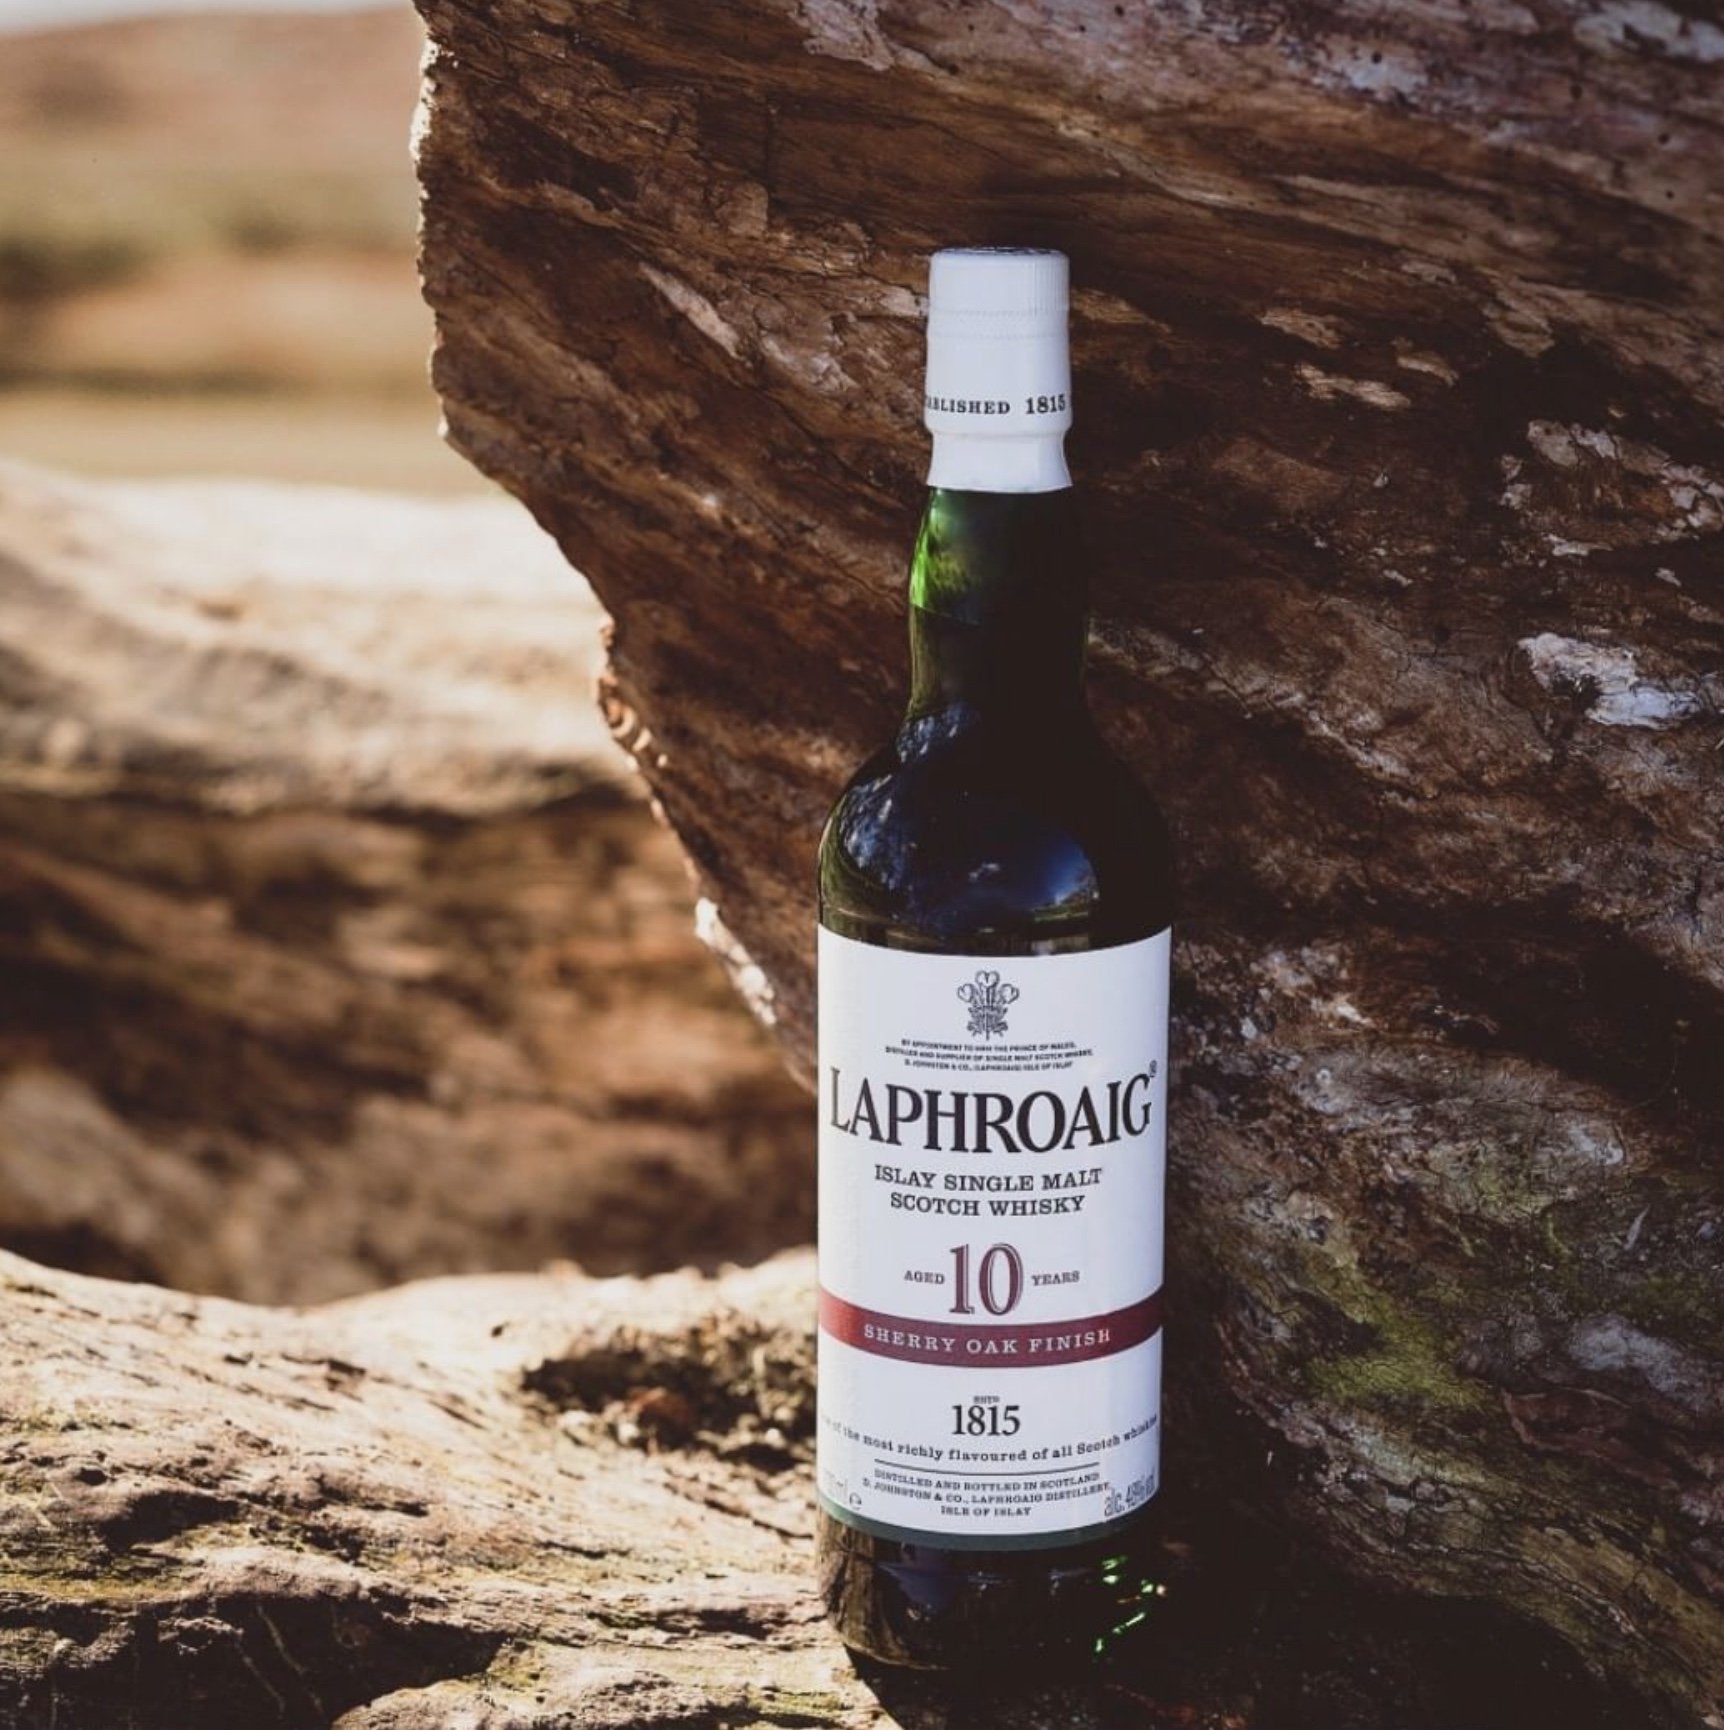 Laphroaig Sherry Oak Finish Single Malt Scotch